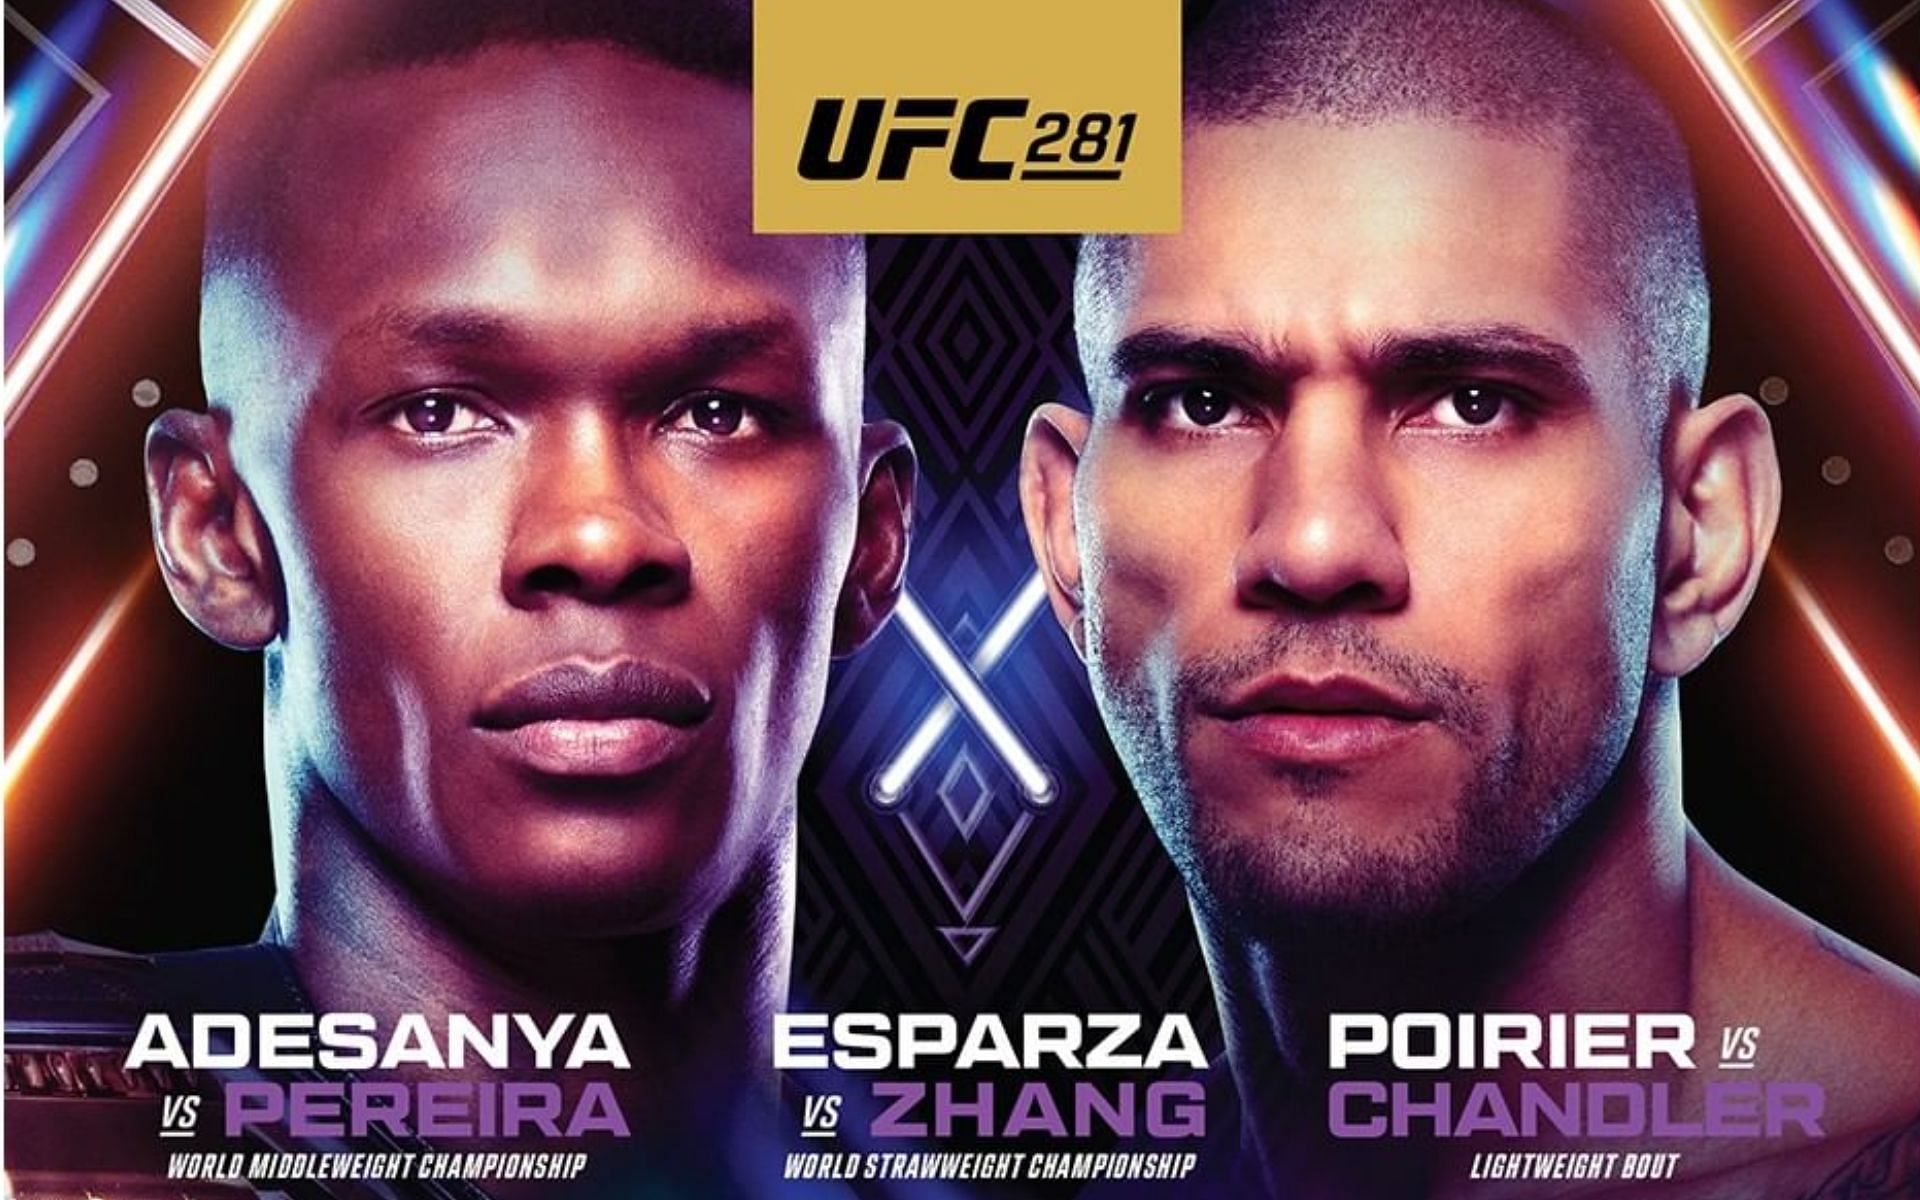 UFC 281 promotional poster [Images courtesy of @btsportufc on Twitter]